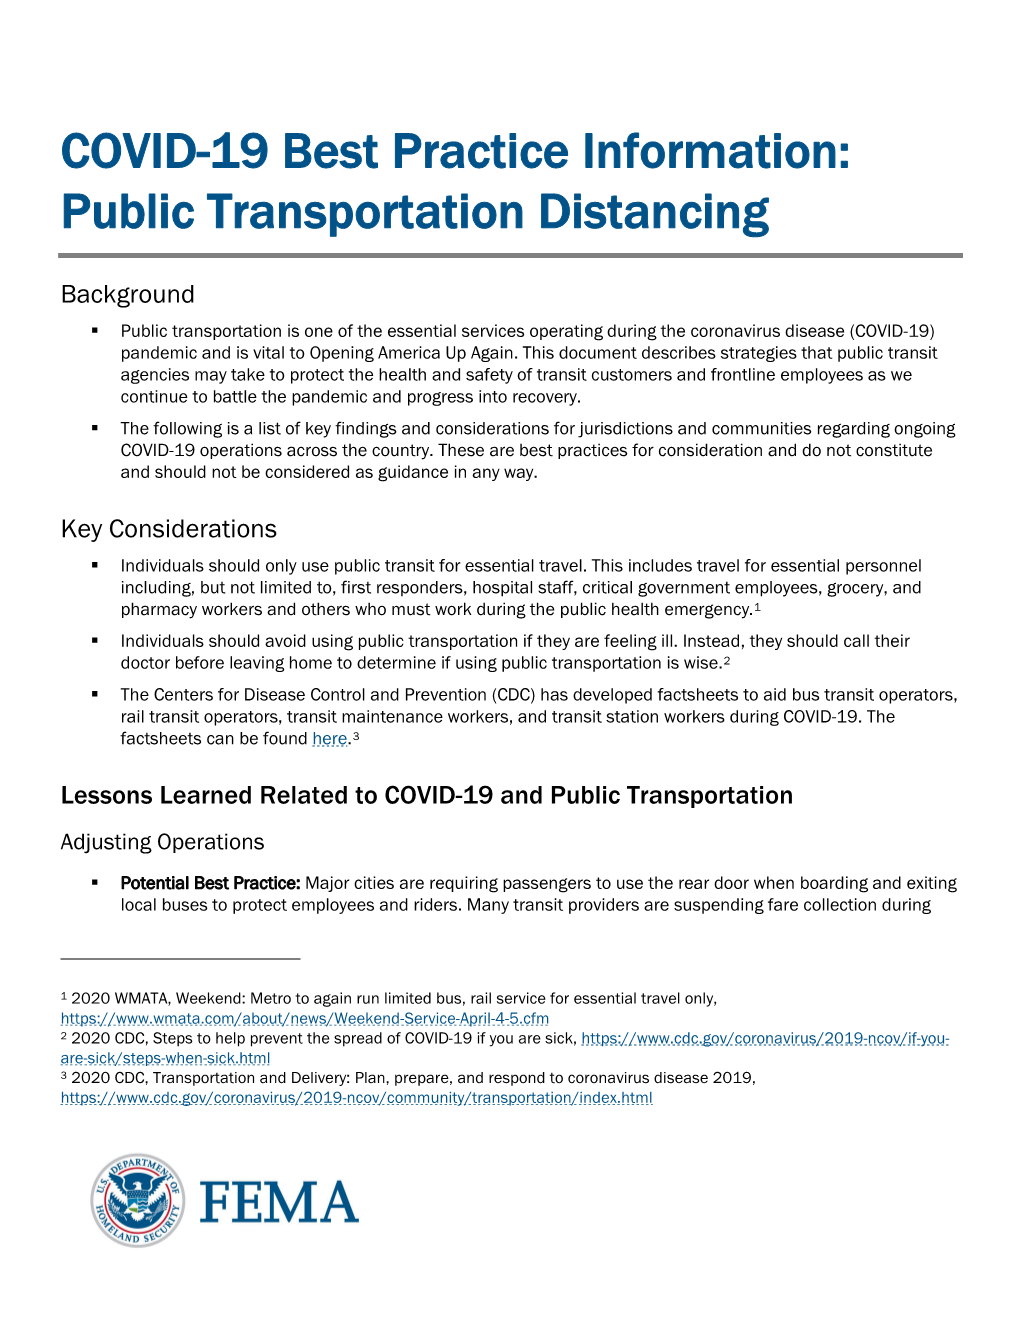 COVID-19 Best Practice Information: Public Transportation Distancing